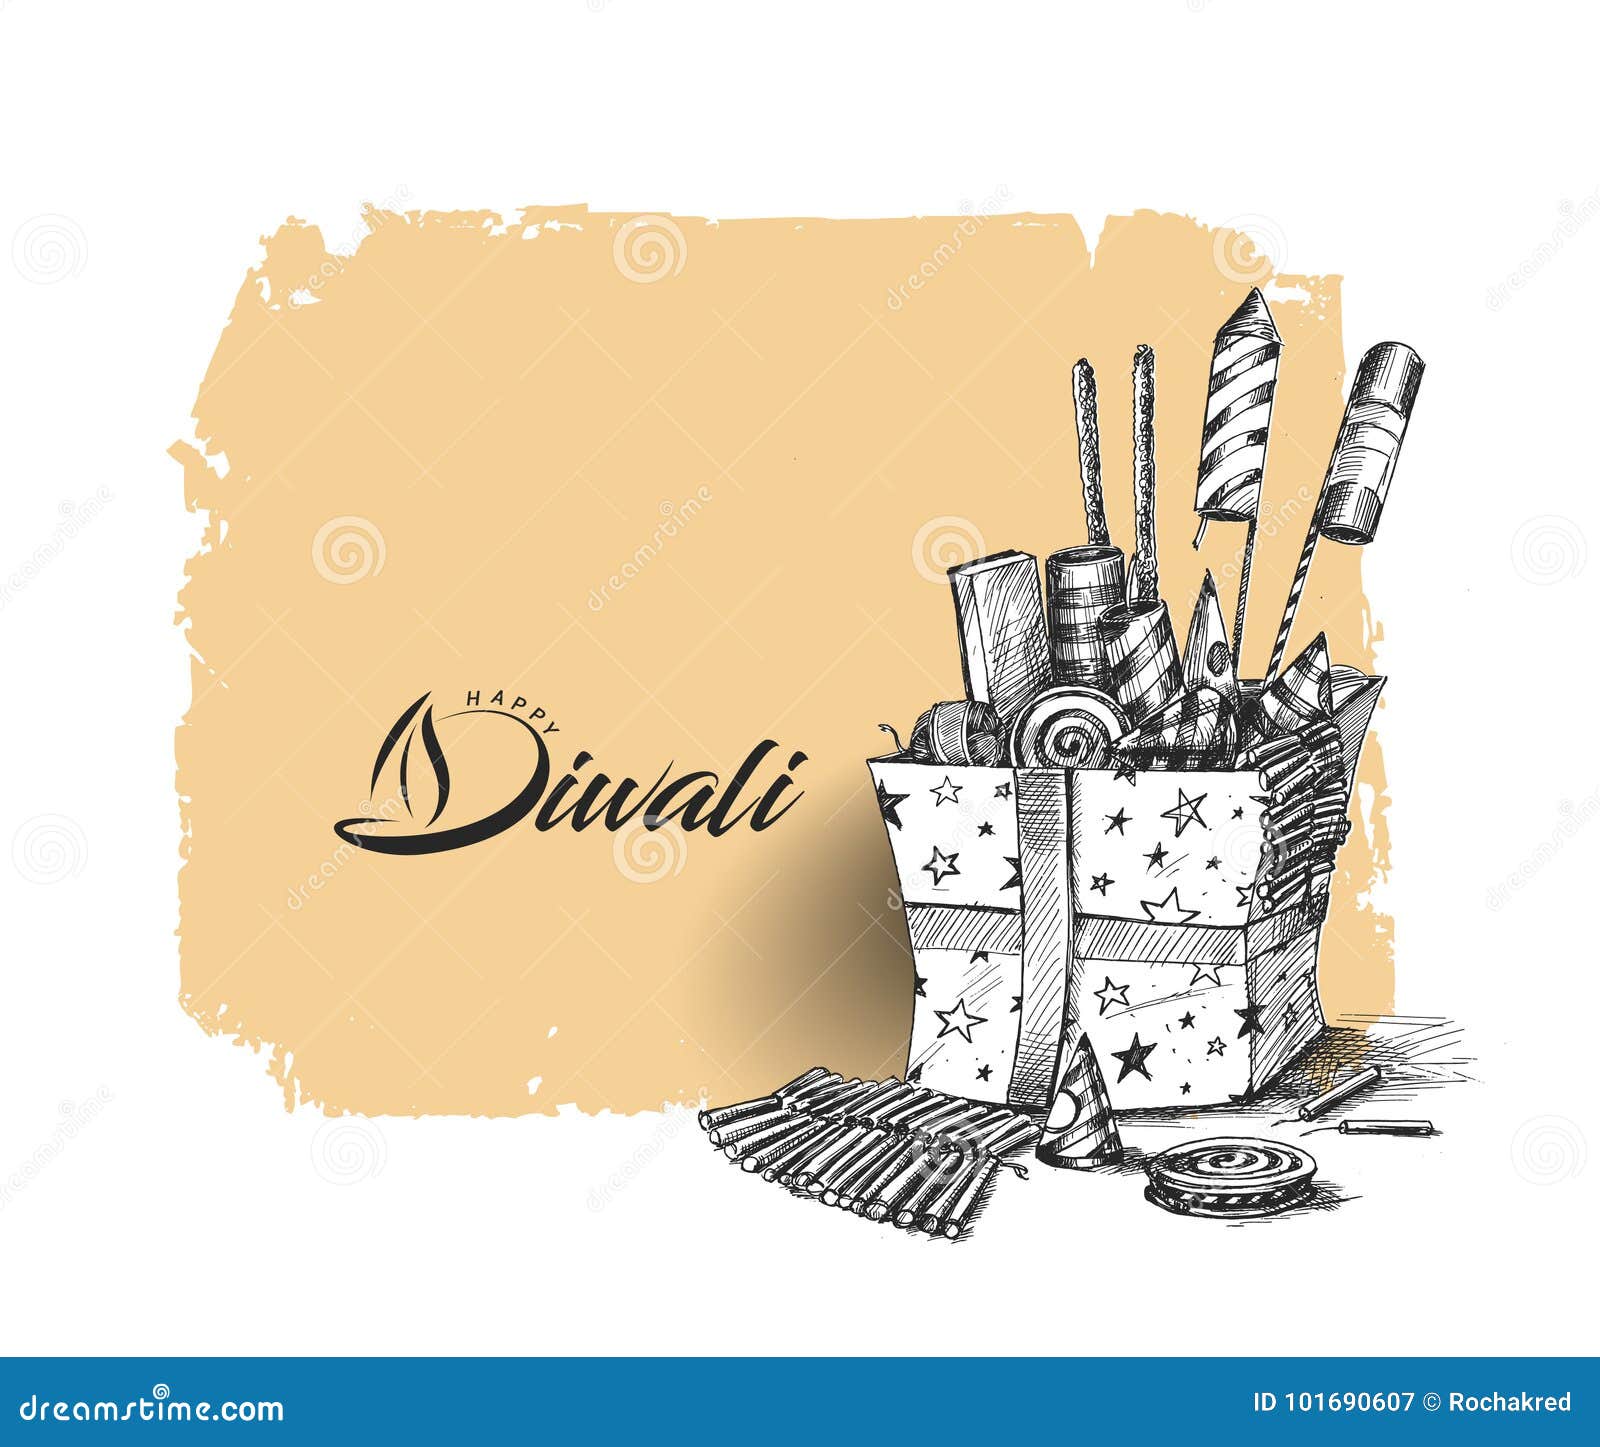 Hand Drawn Diwali Stock Vector Illustration and Royalty Free Hand Drawn  Diwali Clipart